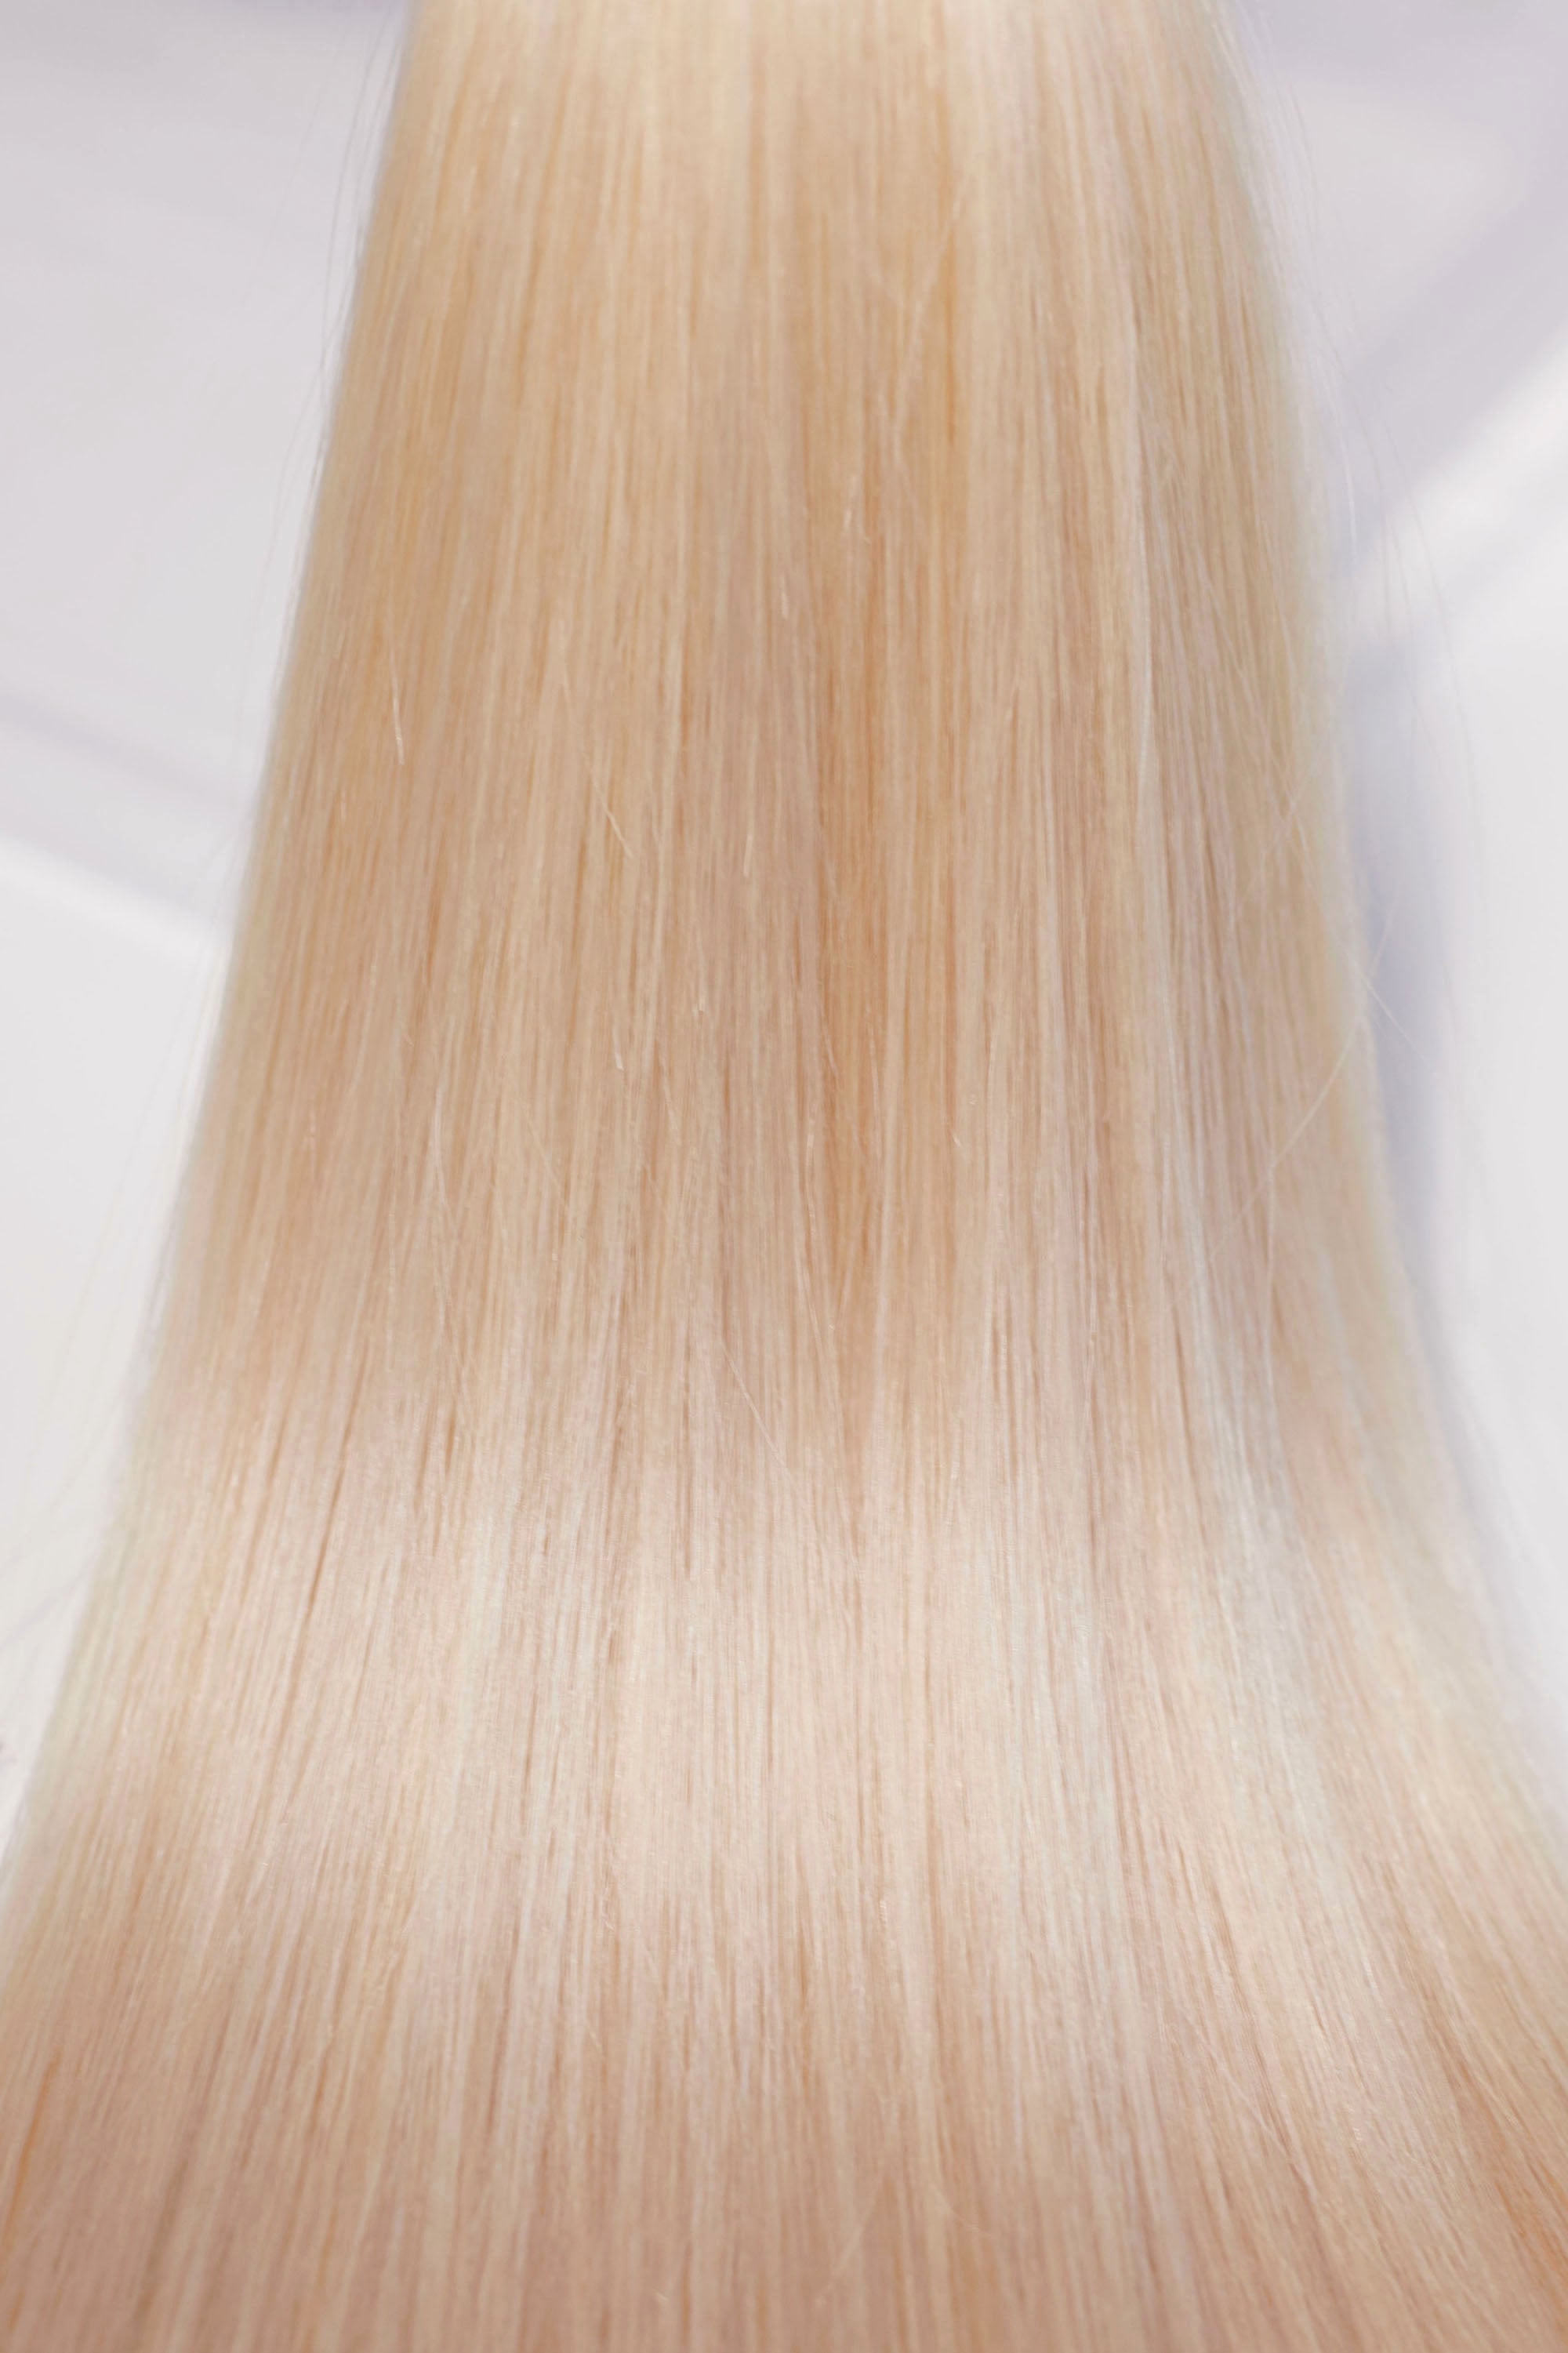 Behair professional Keratin Tip "Premium" 16" (40cm) Natural Straight Platinum Blond #60 - 25g (Micro - 0.5g each pcs) hair extensions